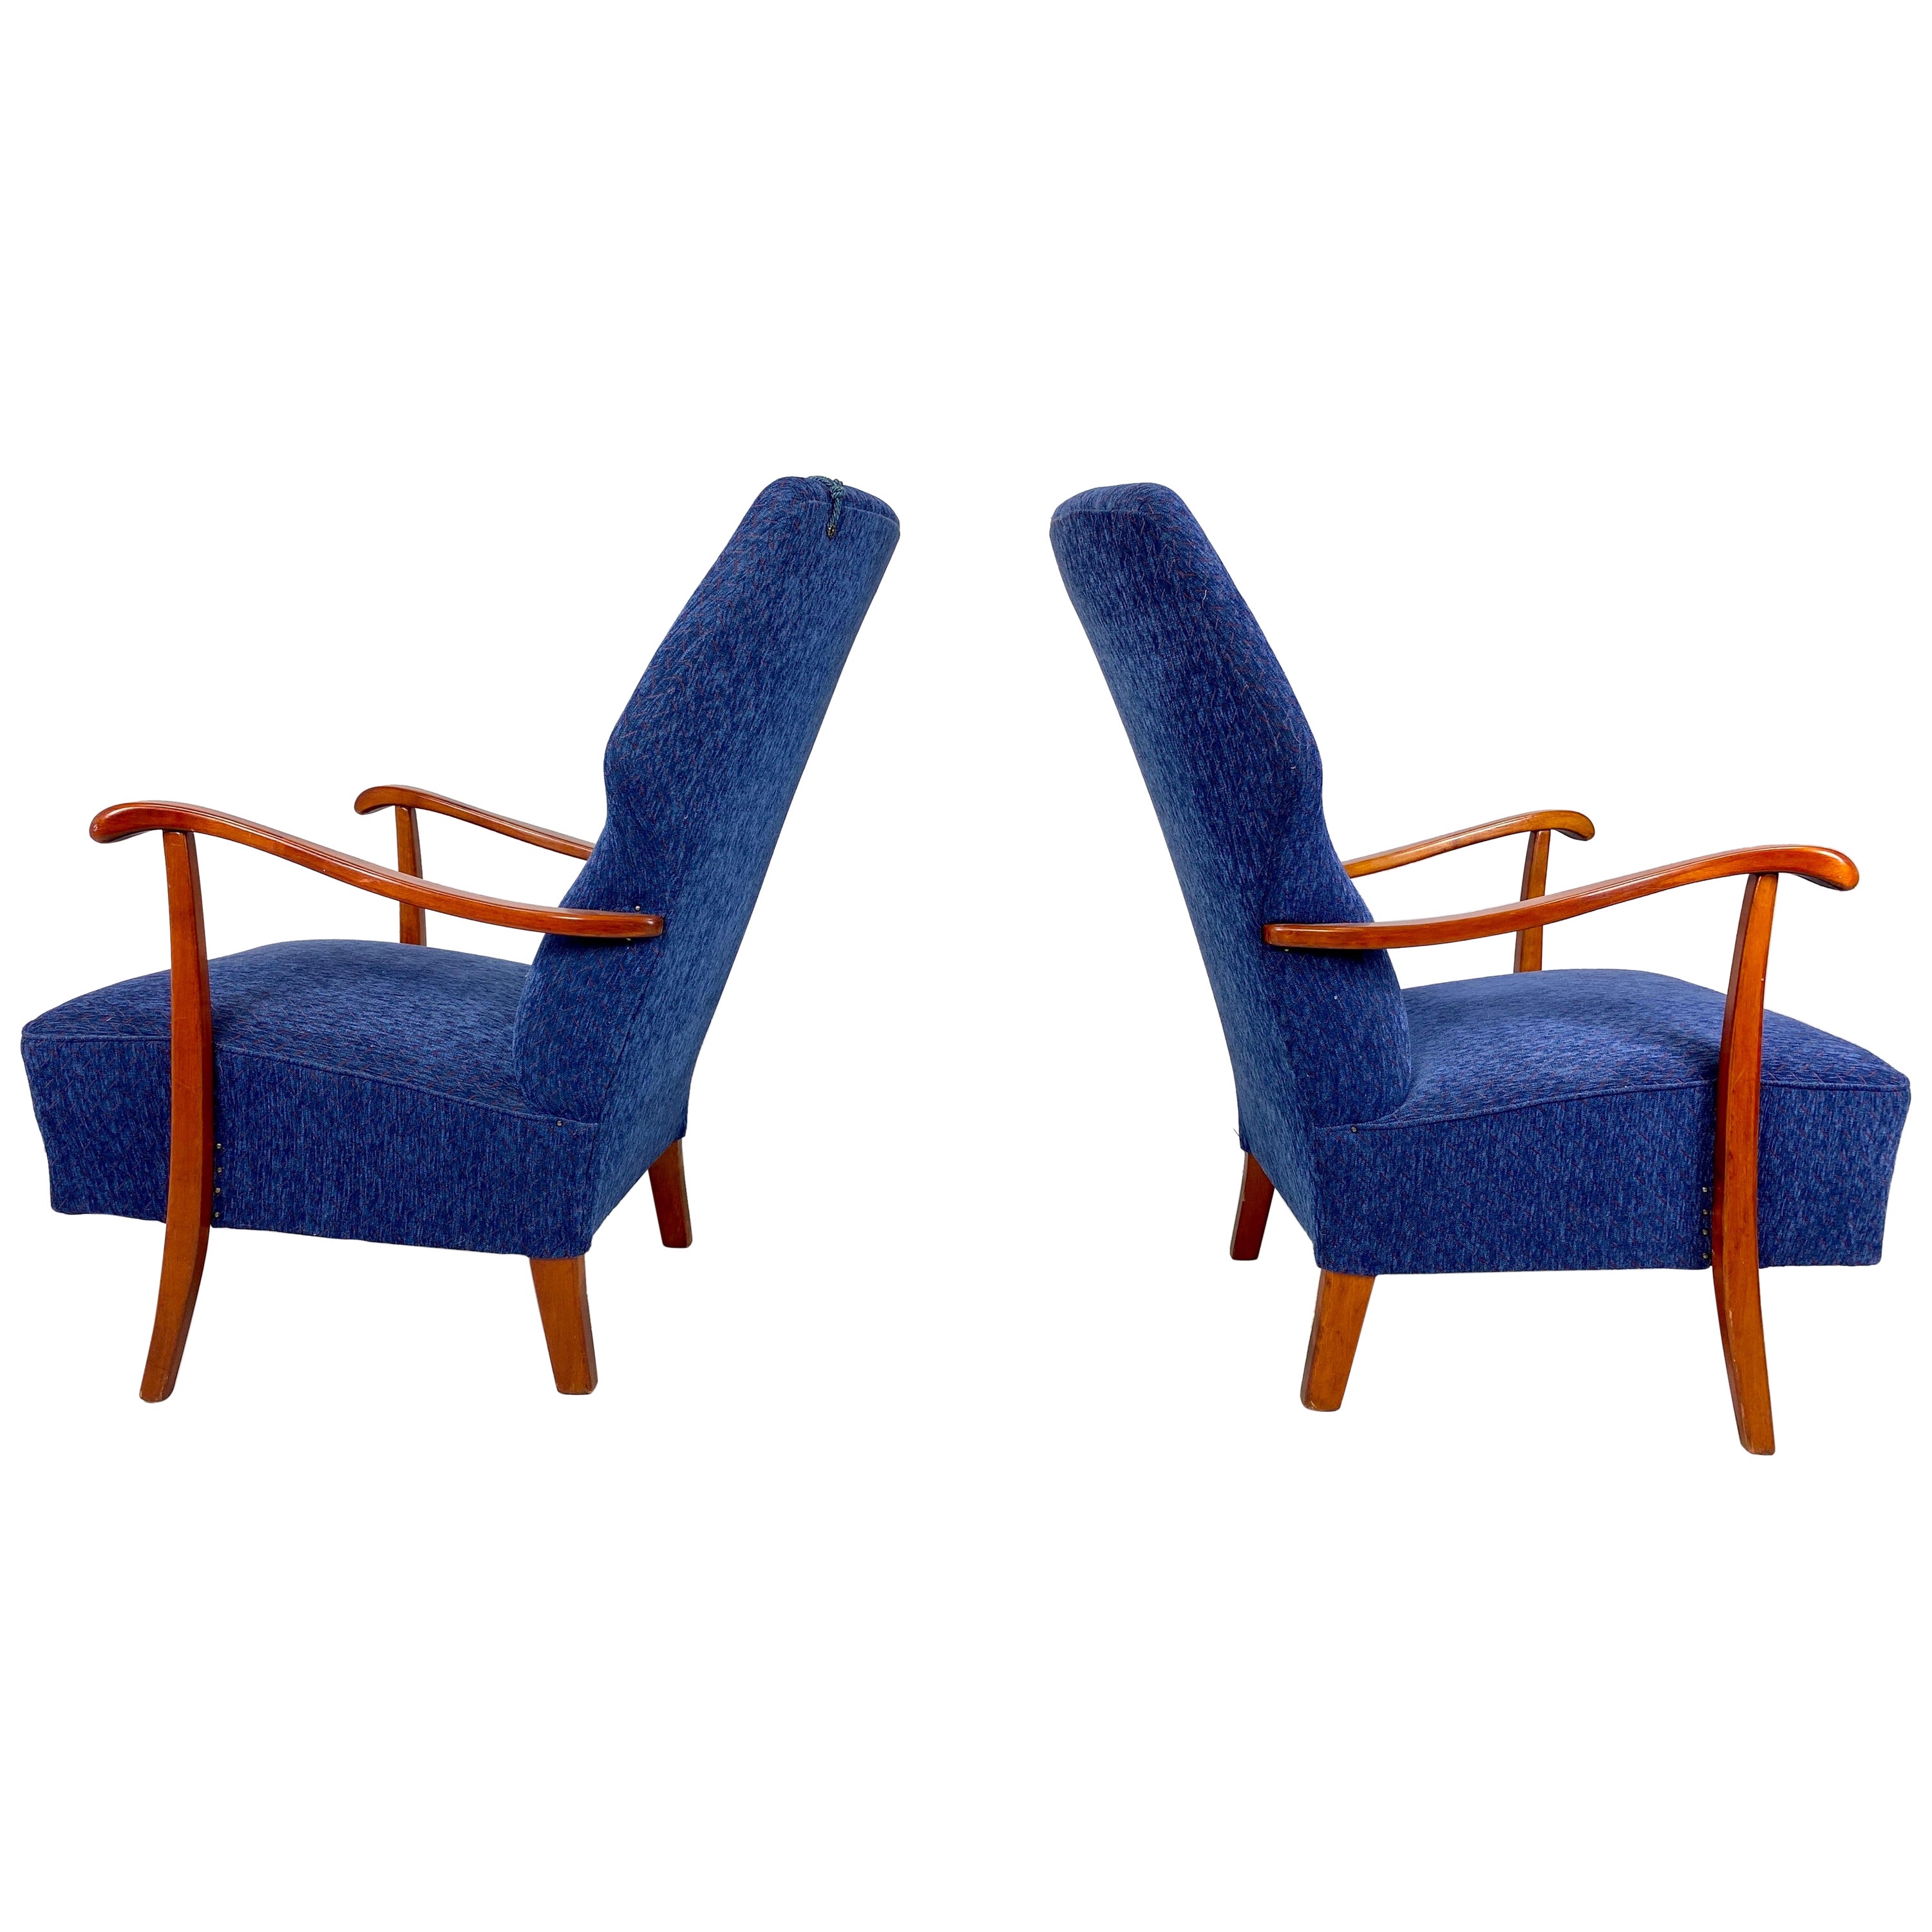 Pair of 1940s Swedish Lounge Chairs